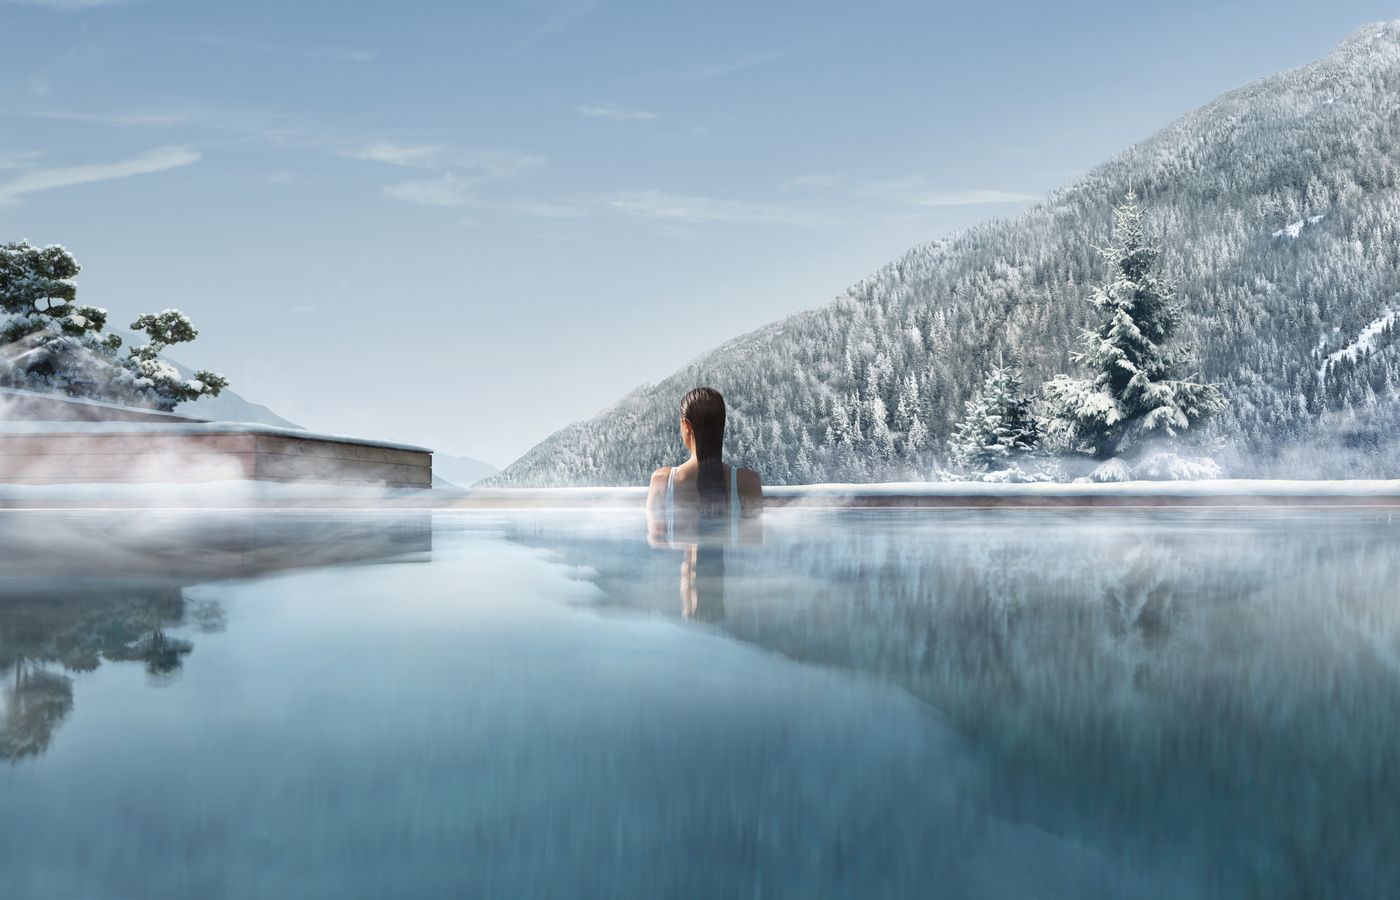 Trip Island - FitReisen - Lefay Resort & Spa Dolomiti in Pinzolo buche jetzt Deinen Wellness & Beauty Urlaub im Lefay Resort & Spa Dolomiti in der Region Südtirol, in Italien günstig bei uns!